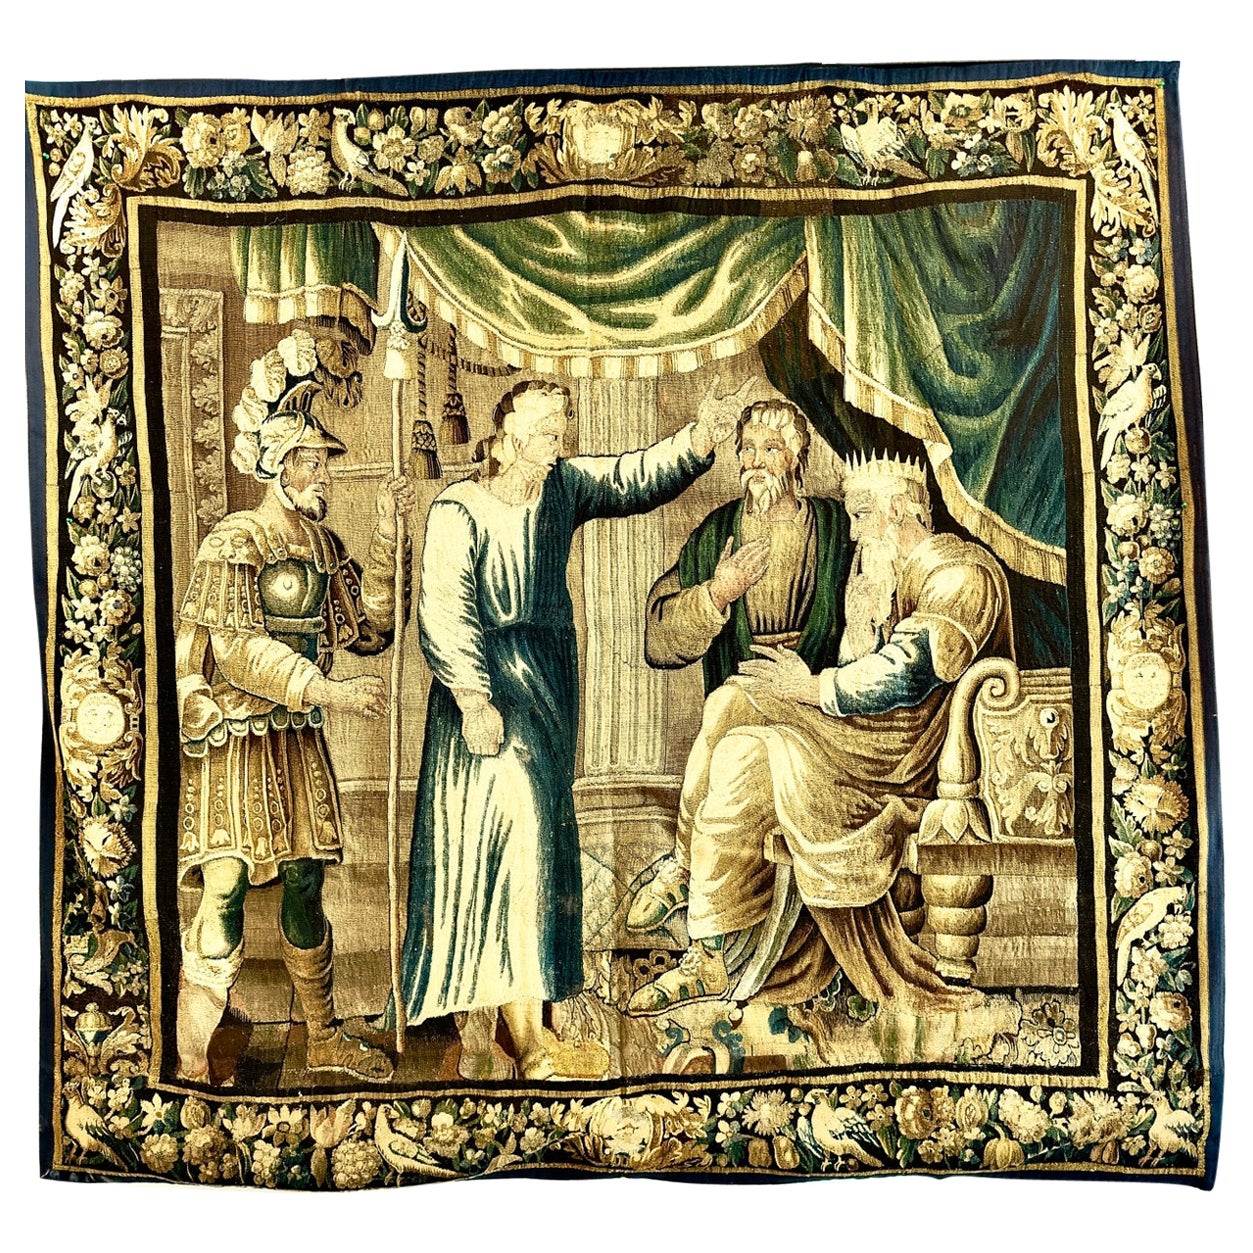 Original 17th Century Flemish "King David" Wool and Silk Tapestry, Green, Blue